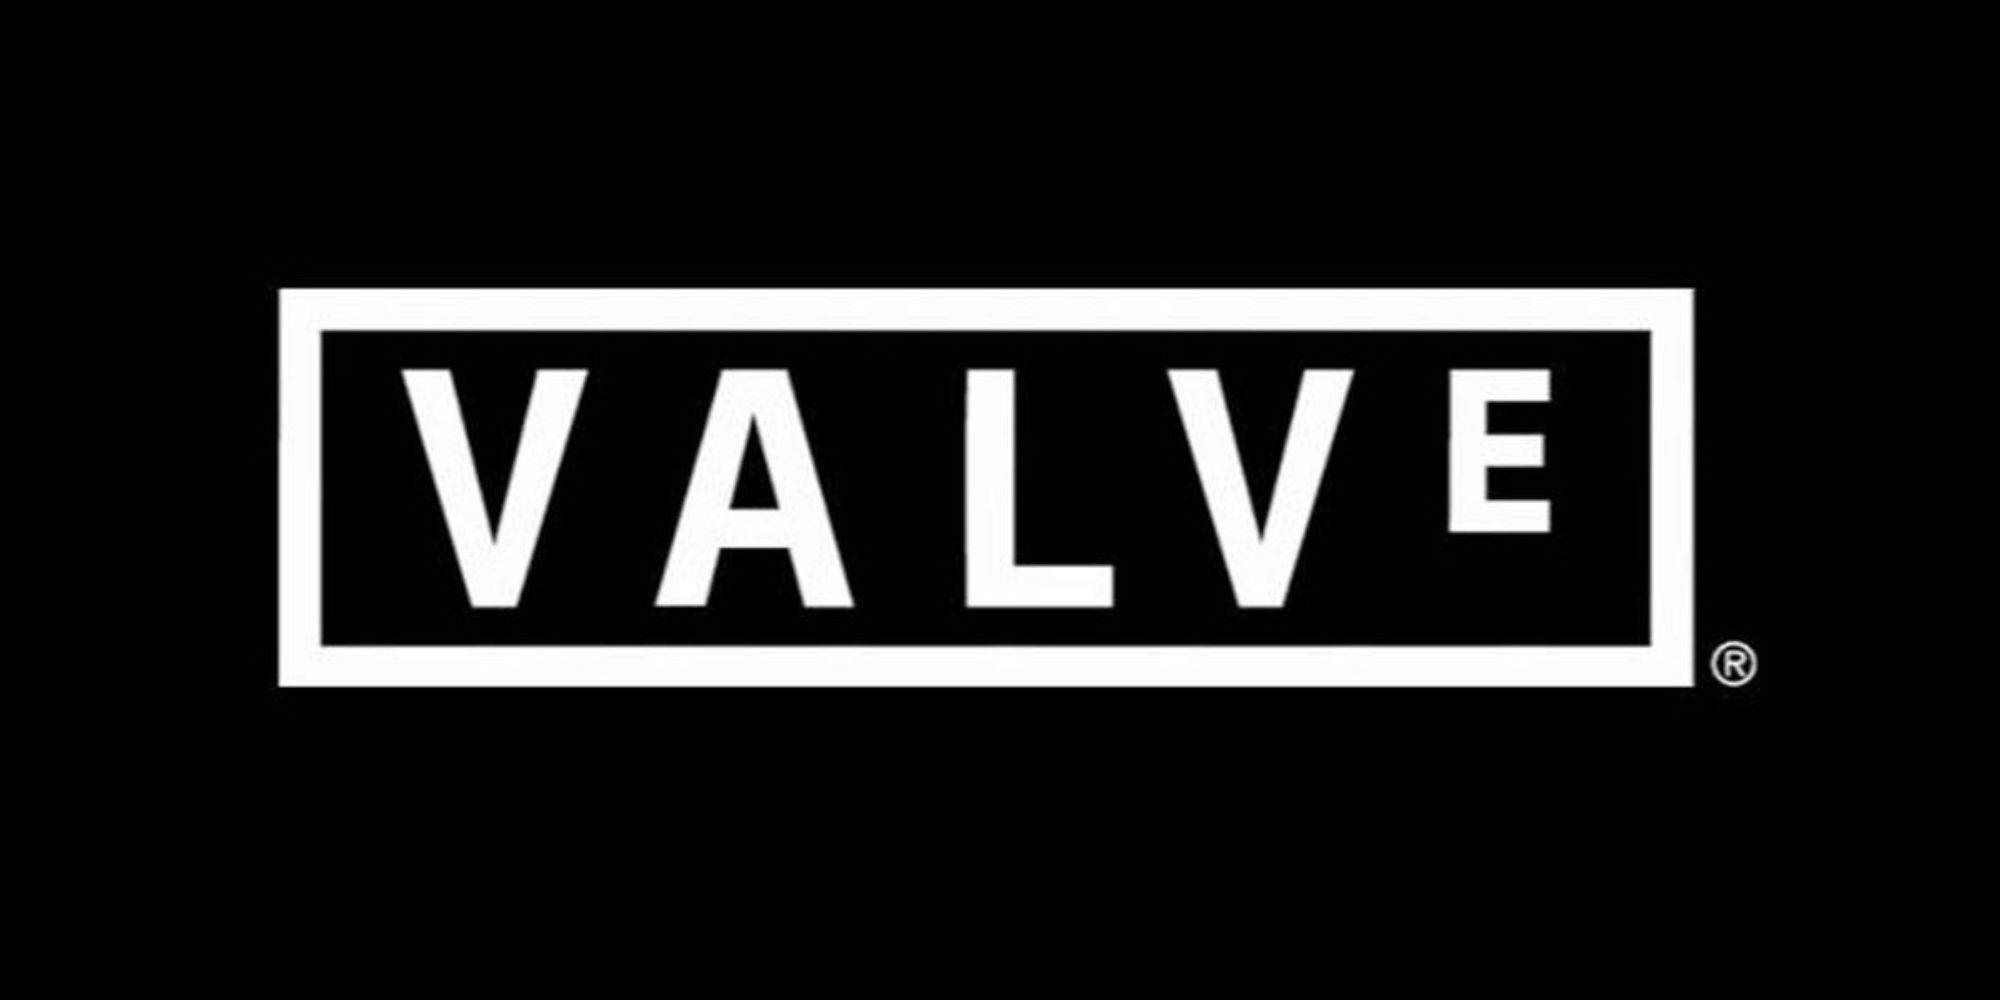 valve logo